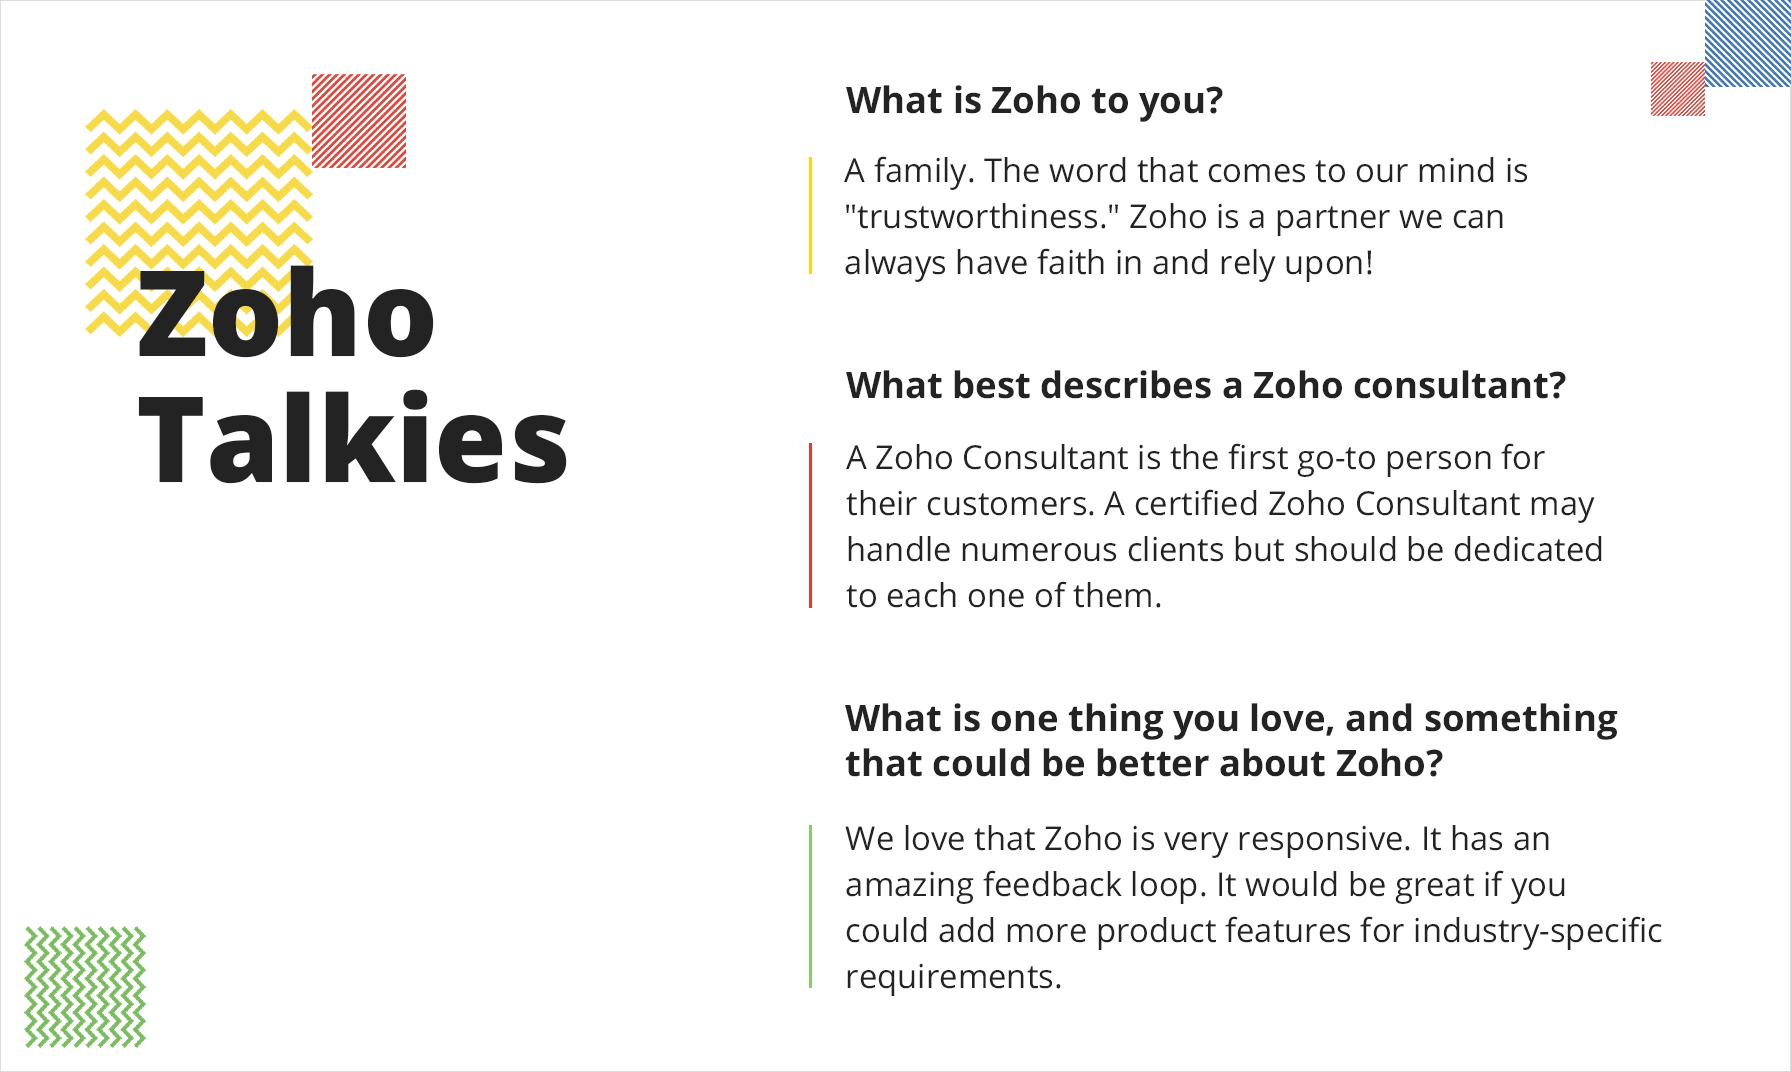 Target Integration's views on Zoho